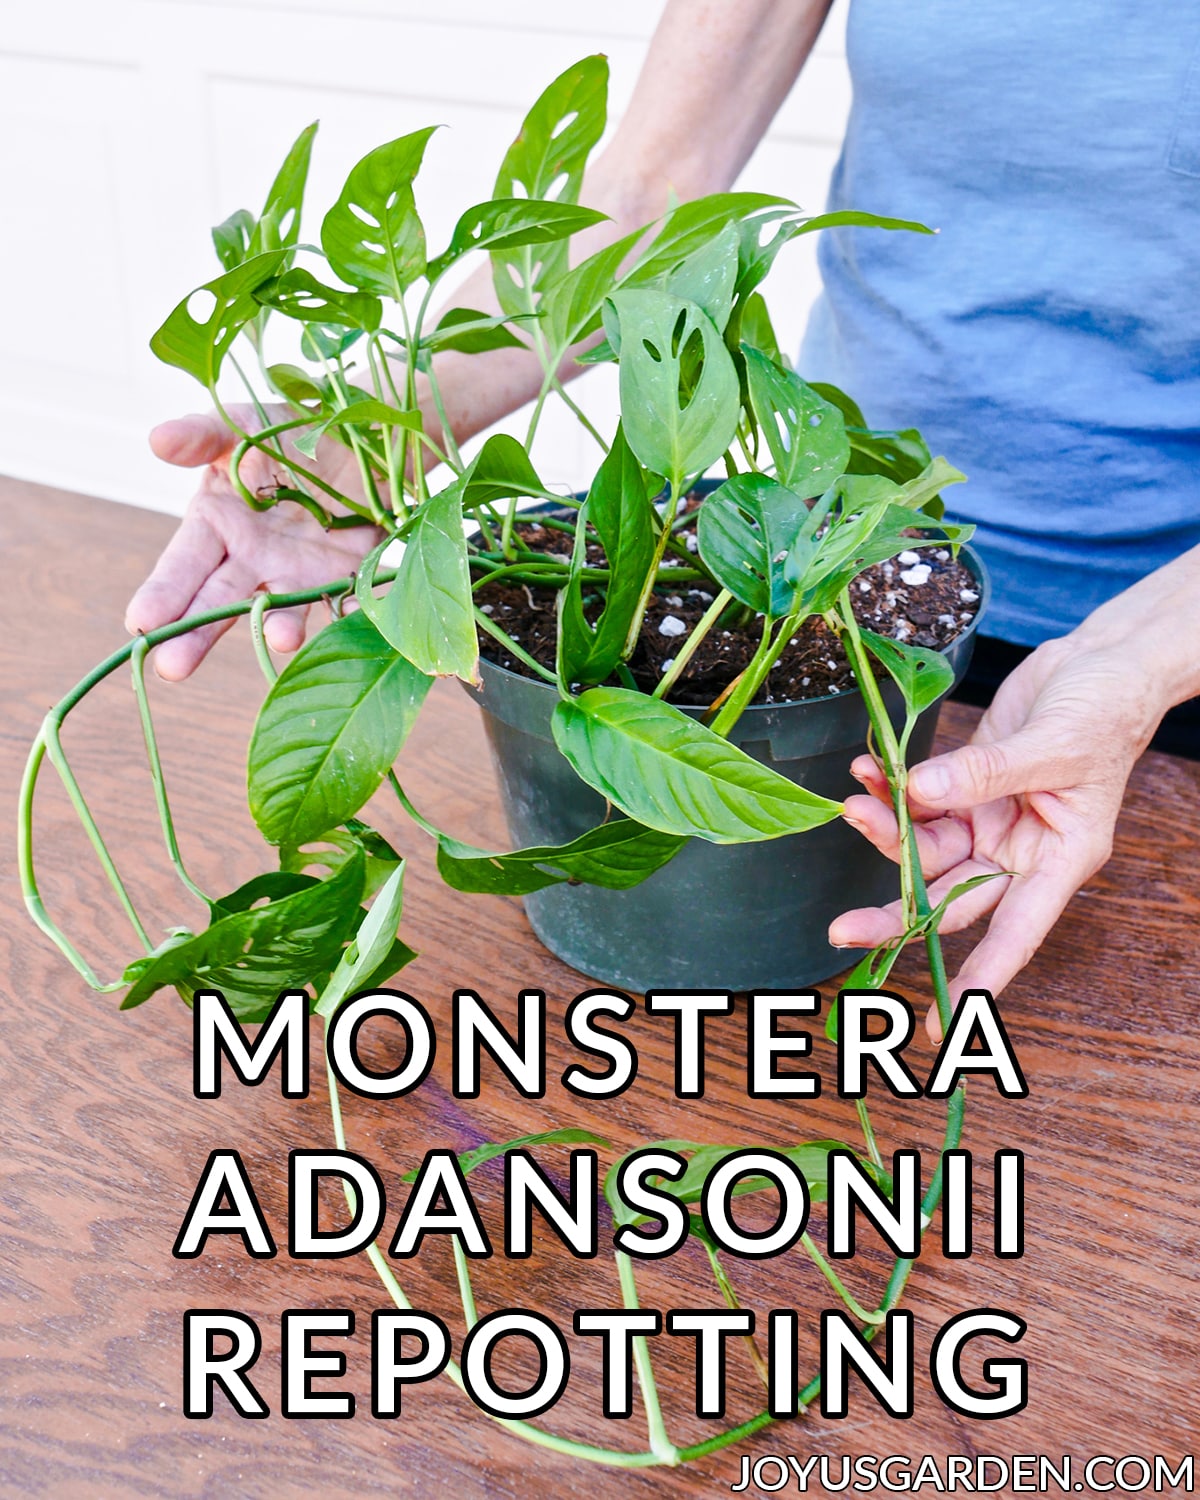  Monstera Adansonii Repotting: ಮಣ್ಣಿನ ಮಿಶ್ರಣವನ್ನು ಬಳಸಲು &amp; ತೆಗೆದುಕೊಳ್ಳಬೇಕಾದ ಕ್ರಮಗಳು